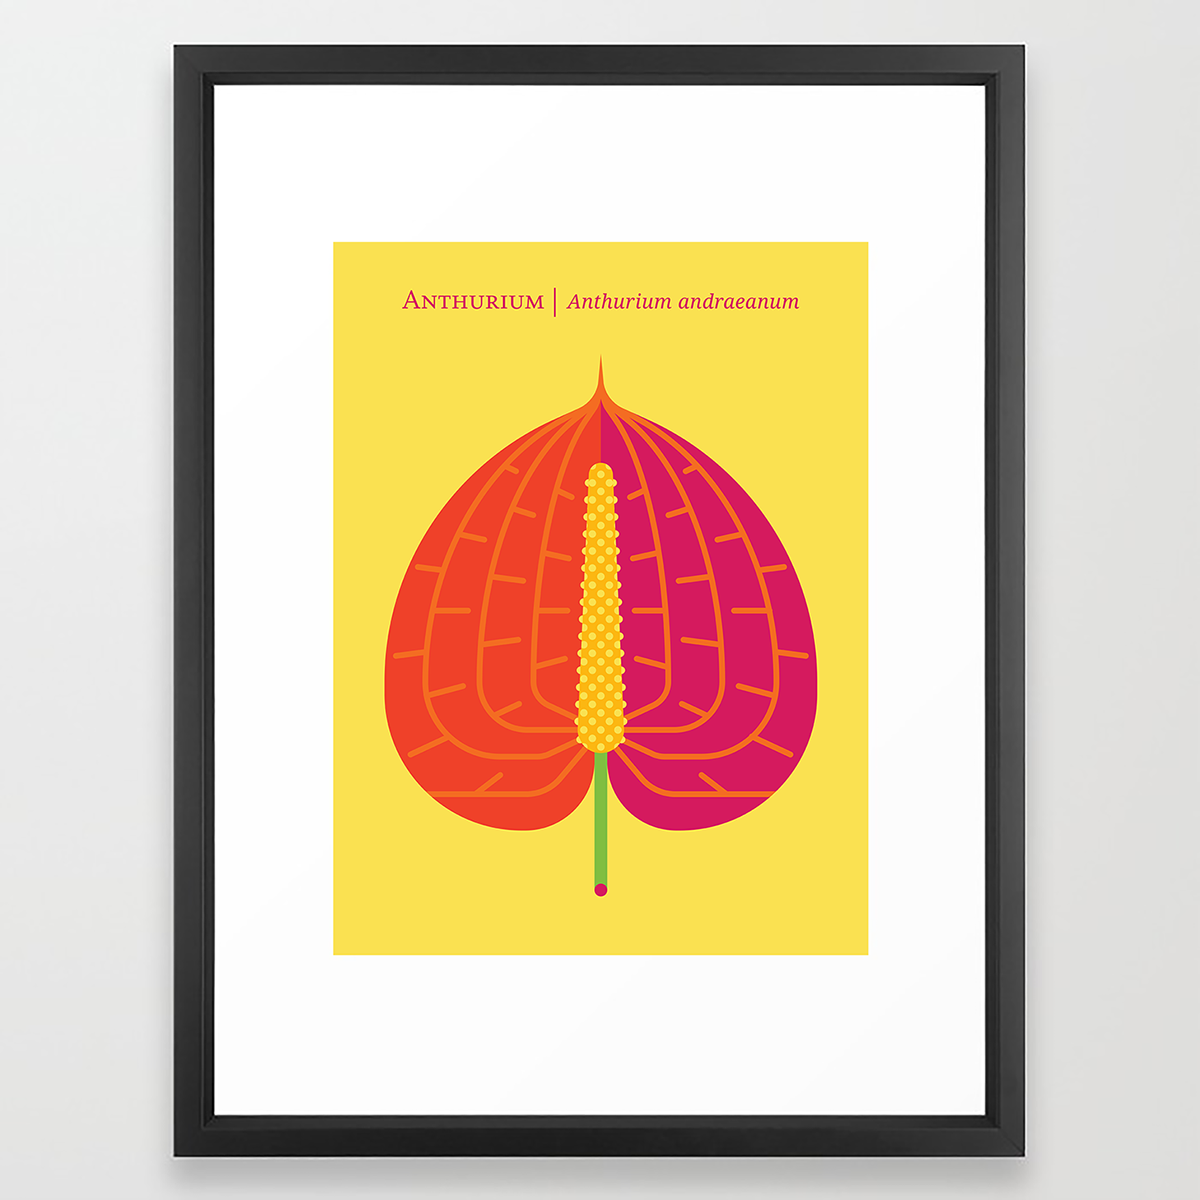 Anthurium Modern Art Print Poster Illustration and Design